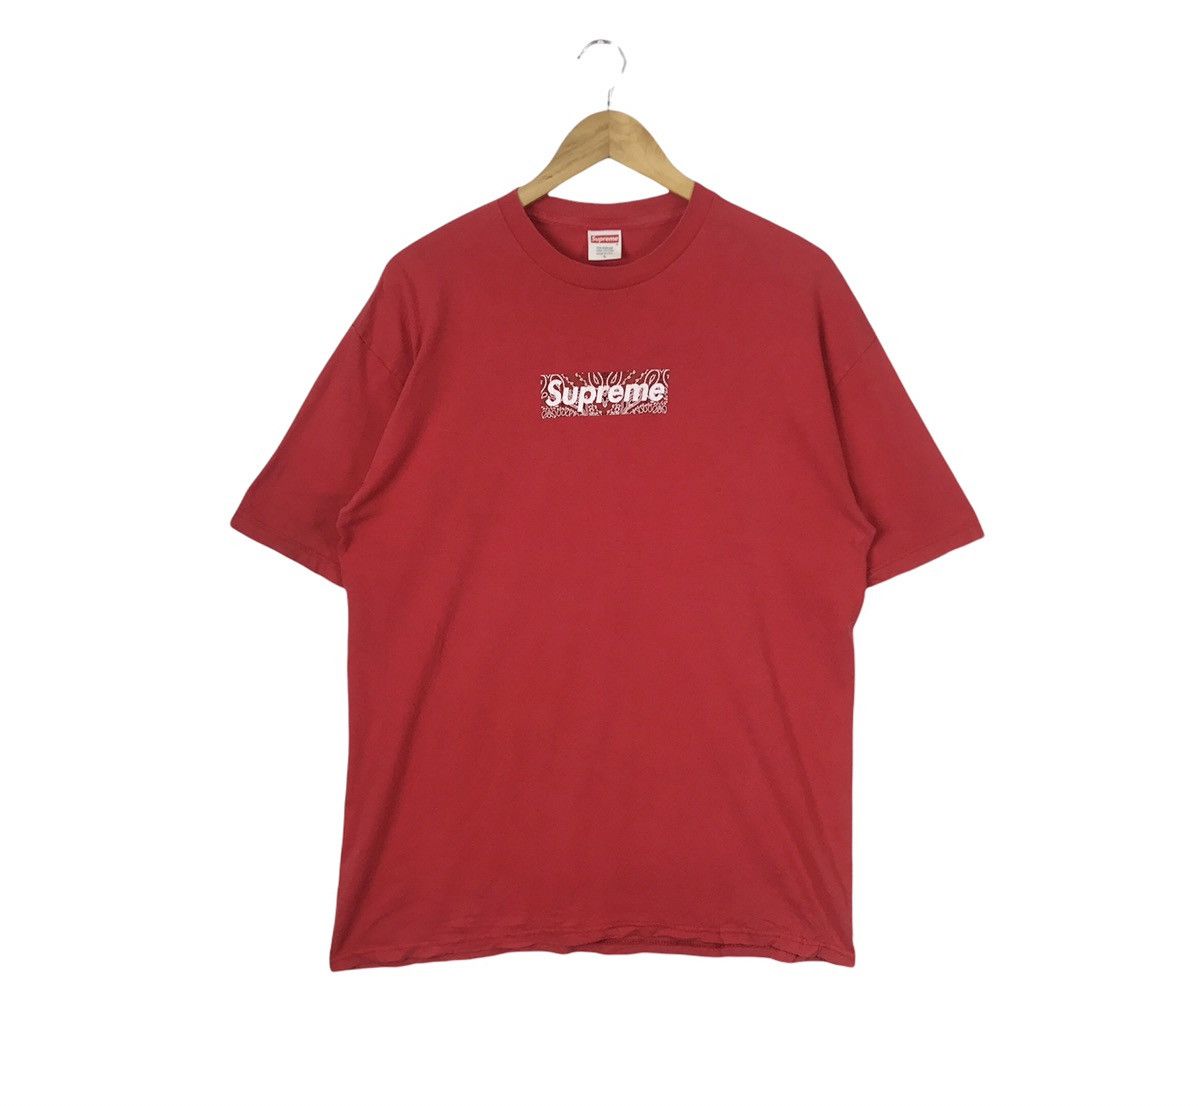 Supreme Supreme Box Logo Paisley 2001 Made in Usa T-Shirt | Grailed